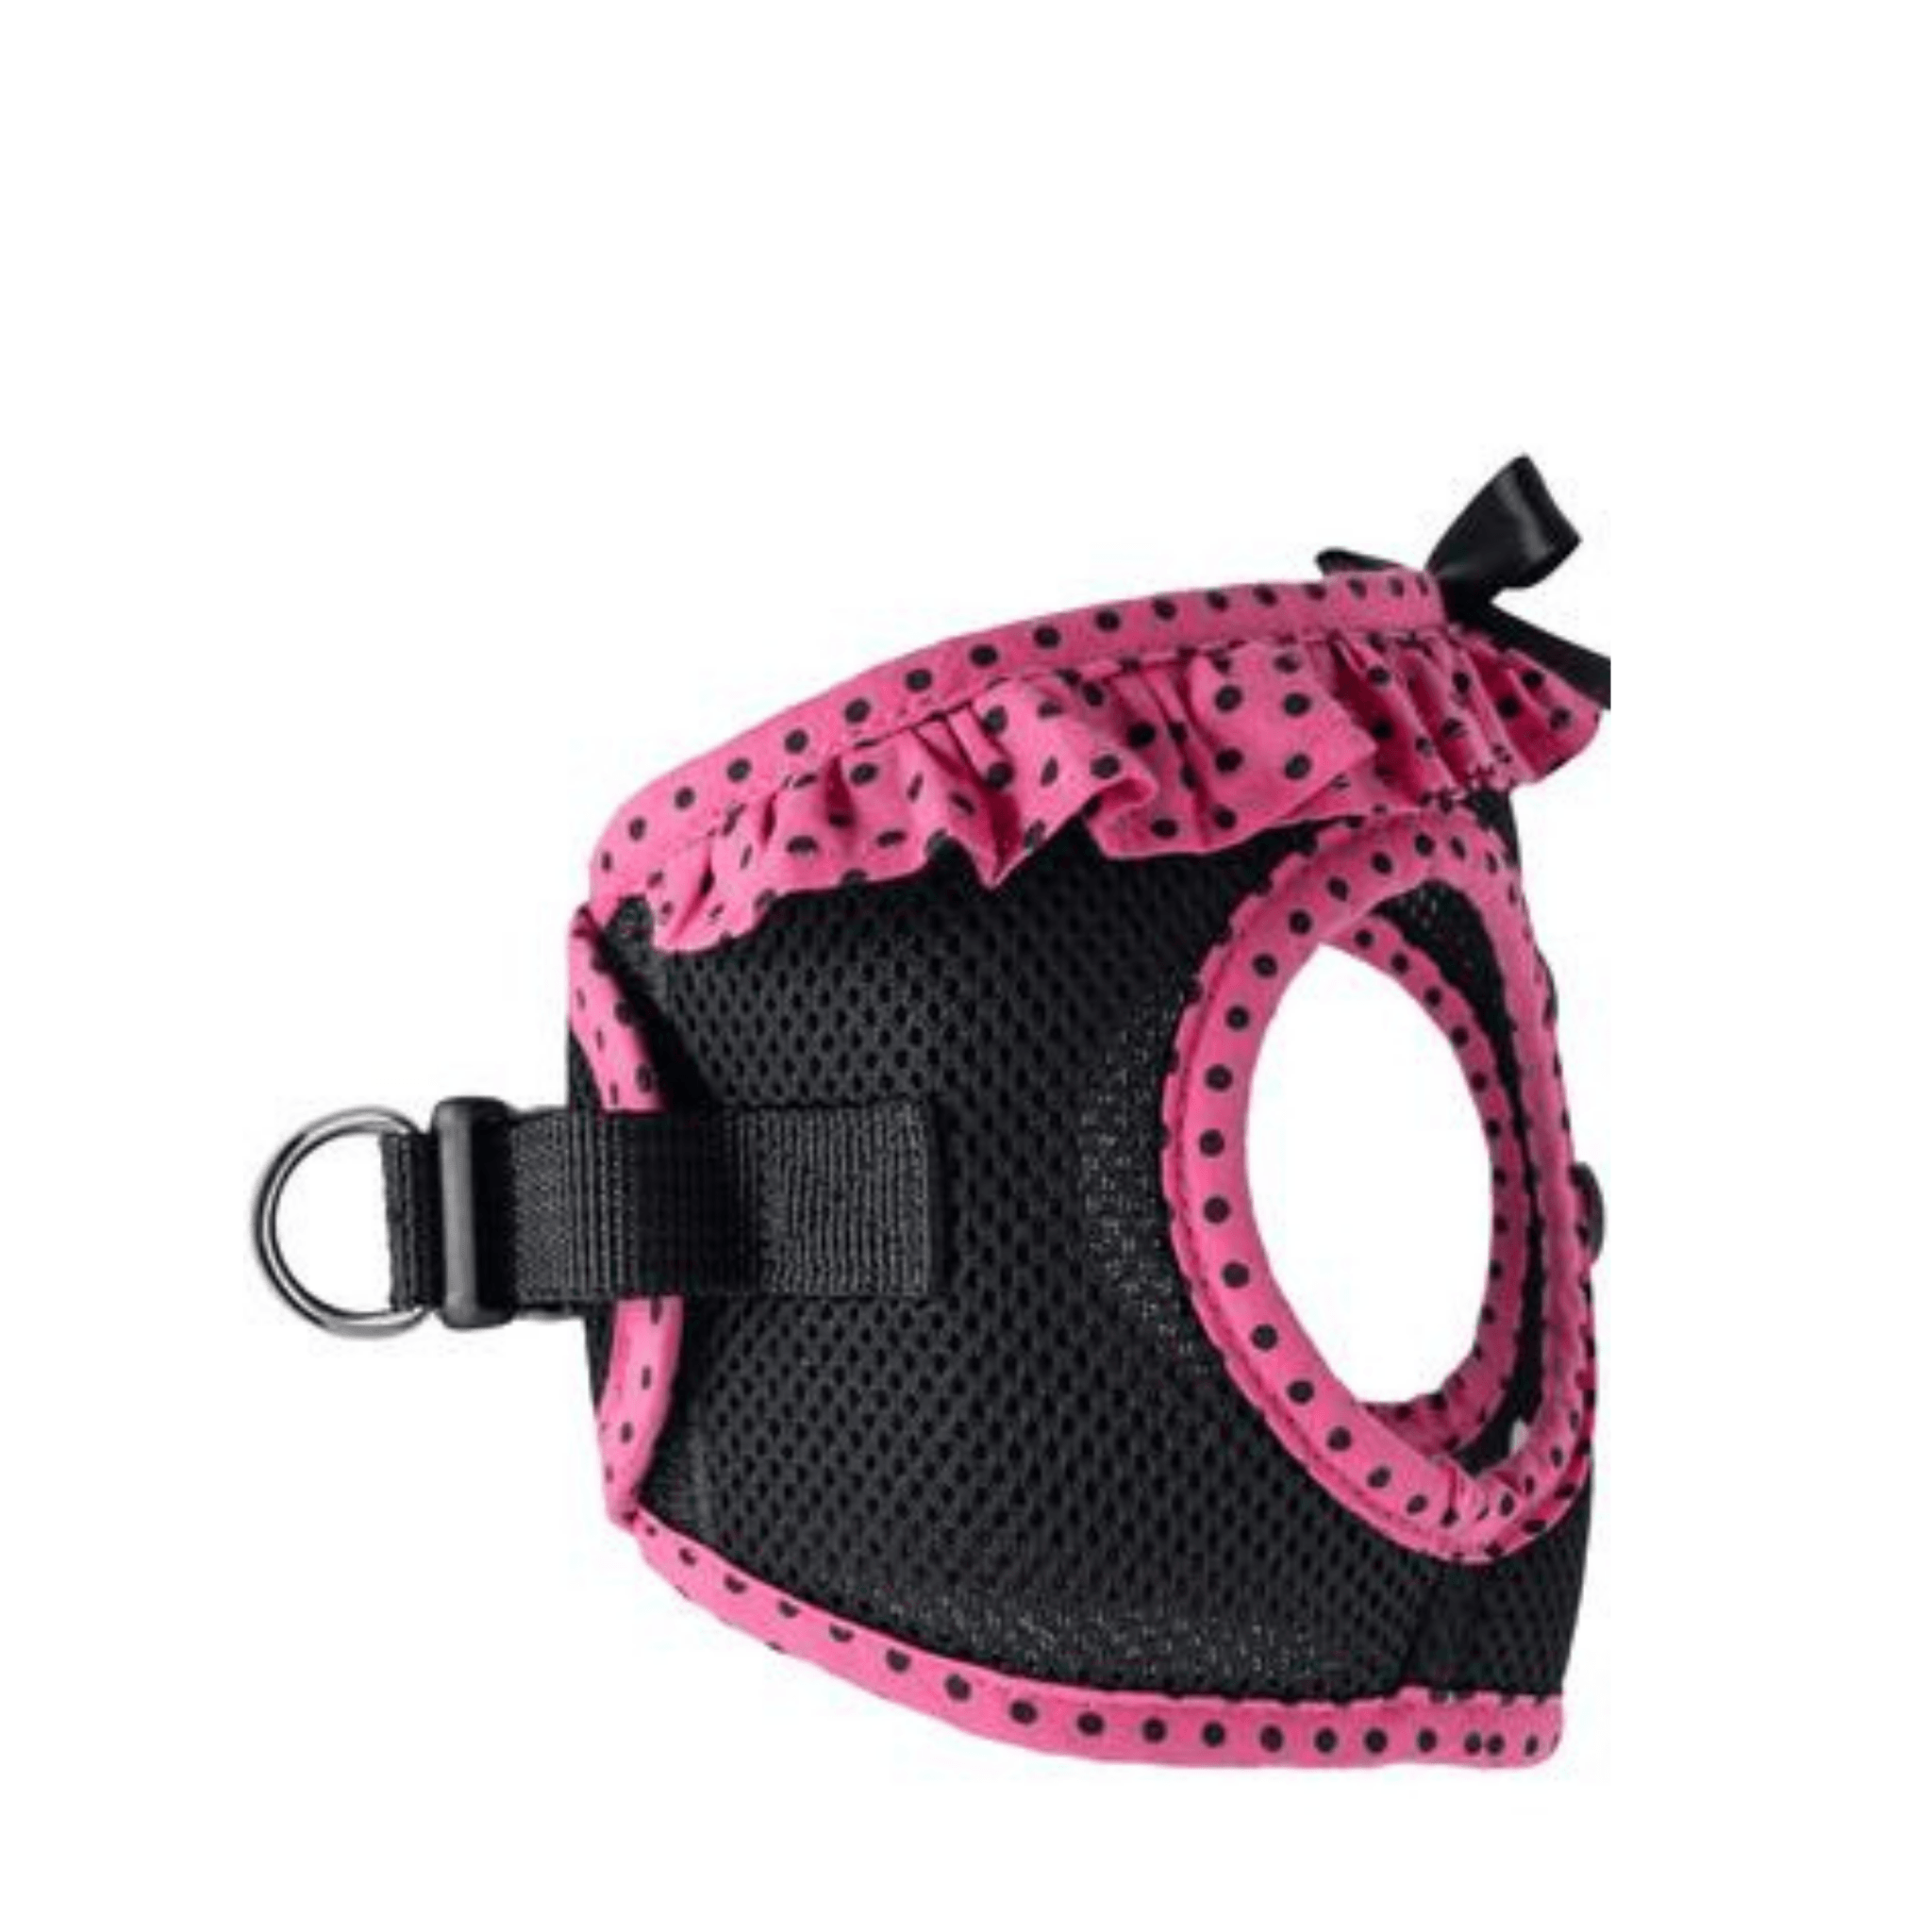 American River Choke Free Dog Harness - Hot Pink and Black Polka Dot - Pooch Luxury